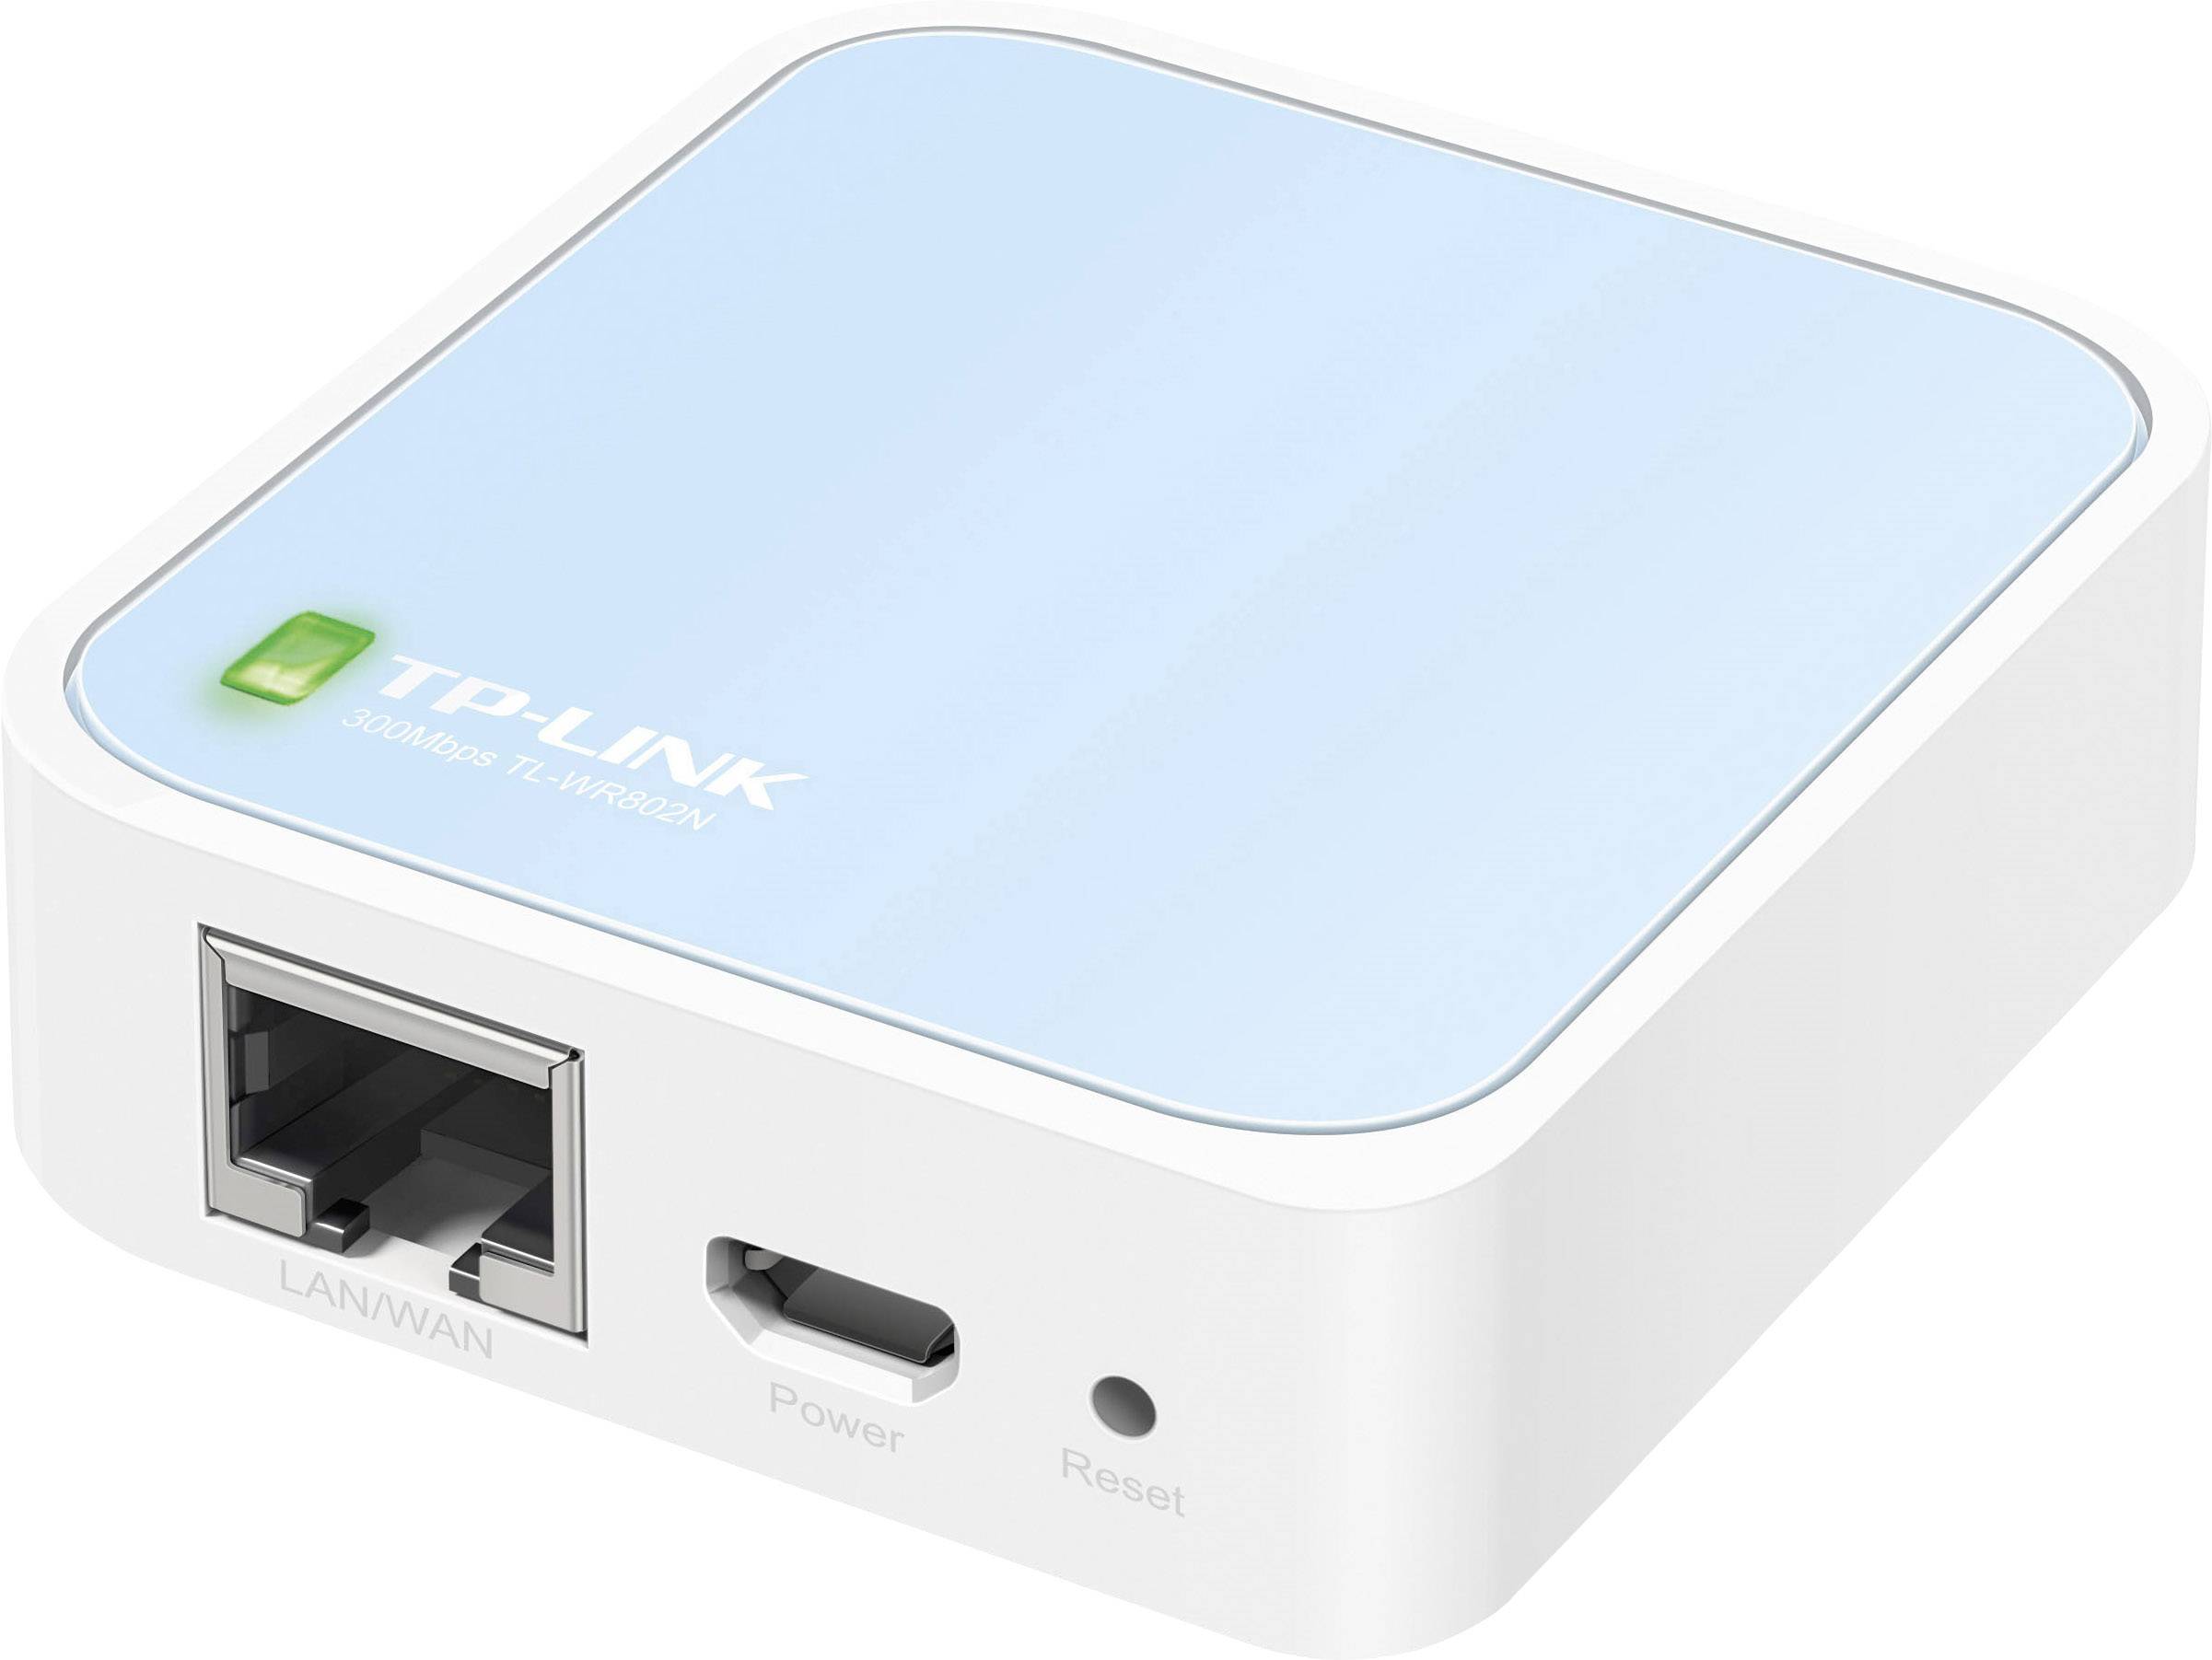 TP-LINK N300 Nano Pocket Wi-Fi Router